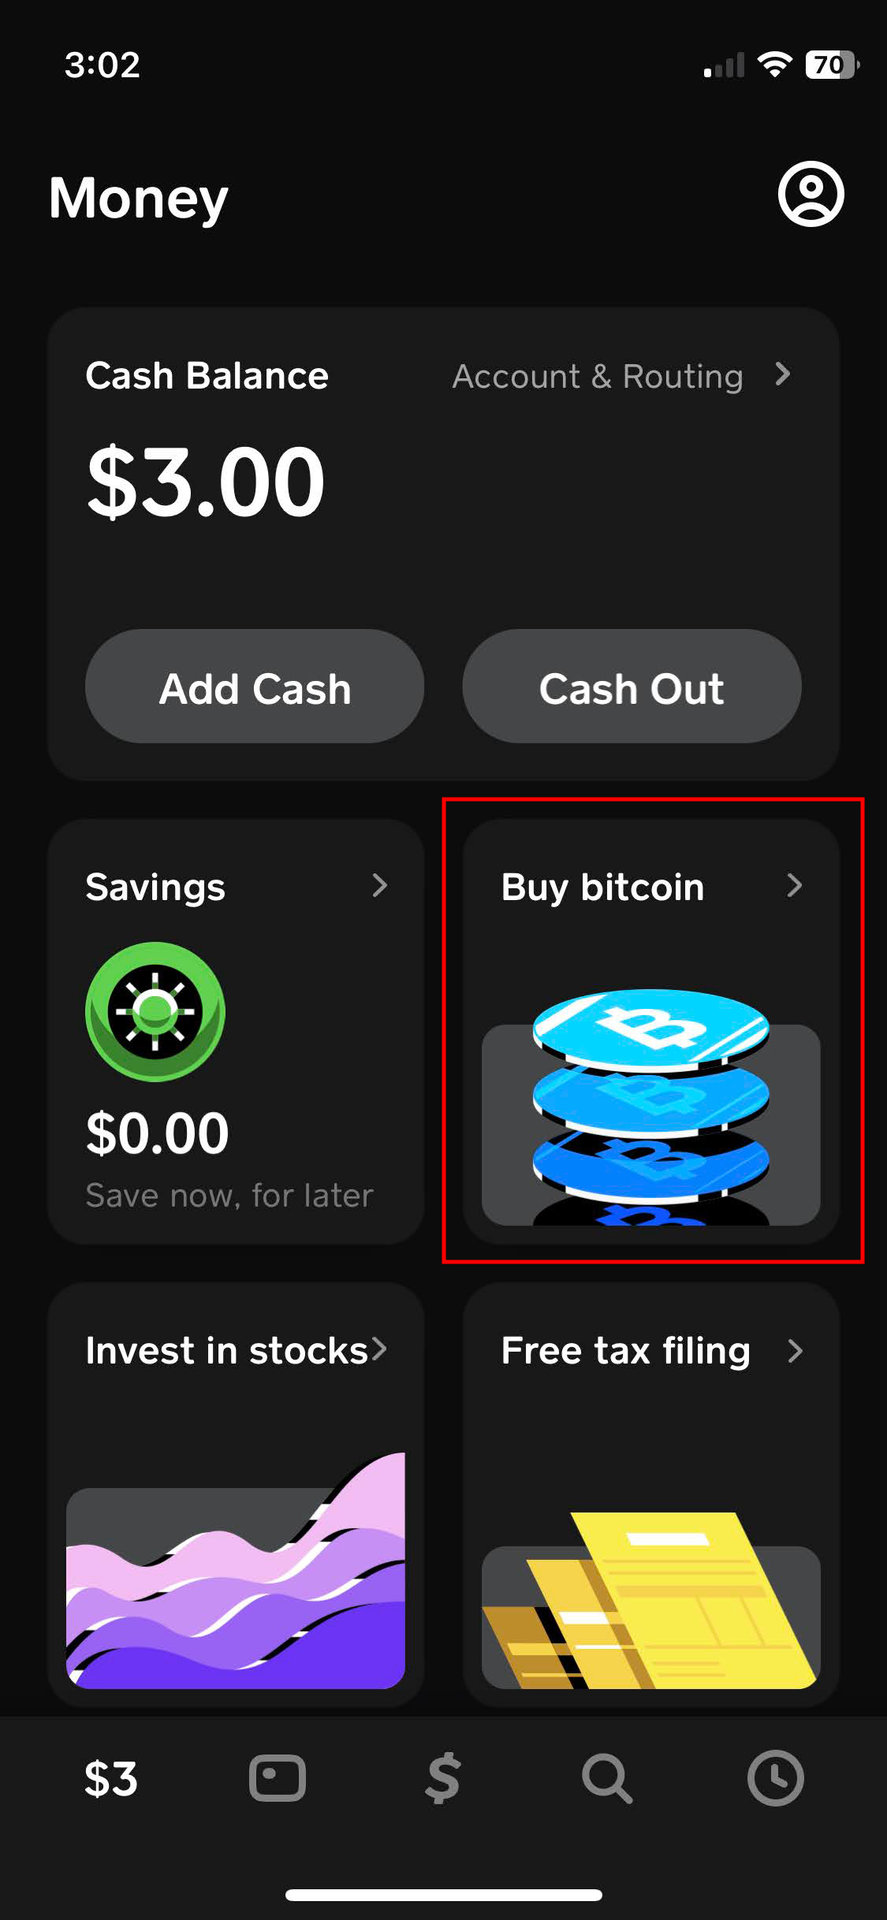 How to buy Bitcoin on Cash App 2